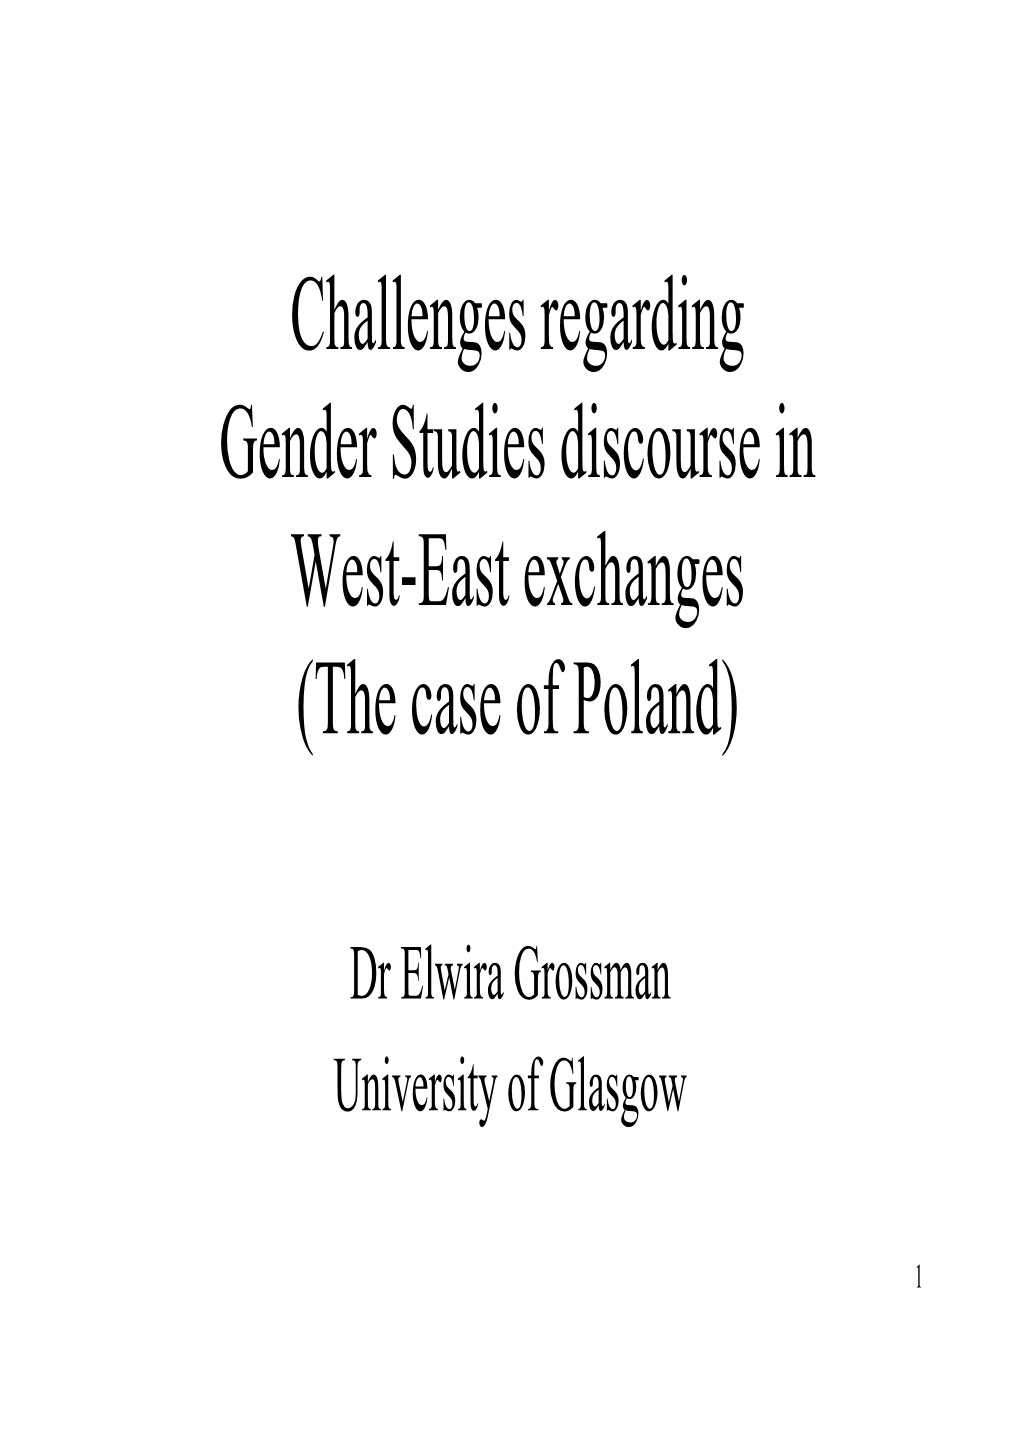 Challenges Regarding Gender Studies Discourse in West-East Exchanges (The Case of Poland)